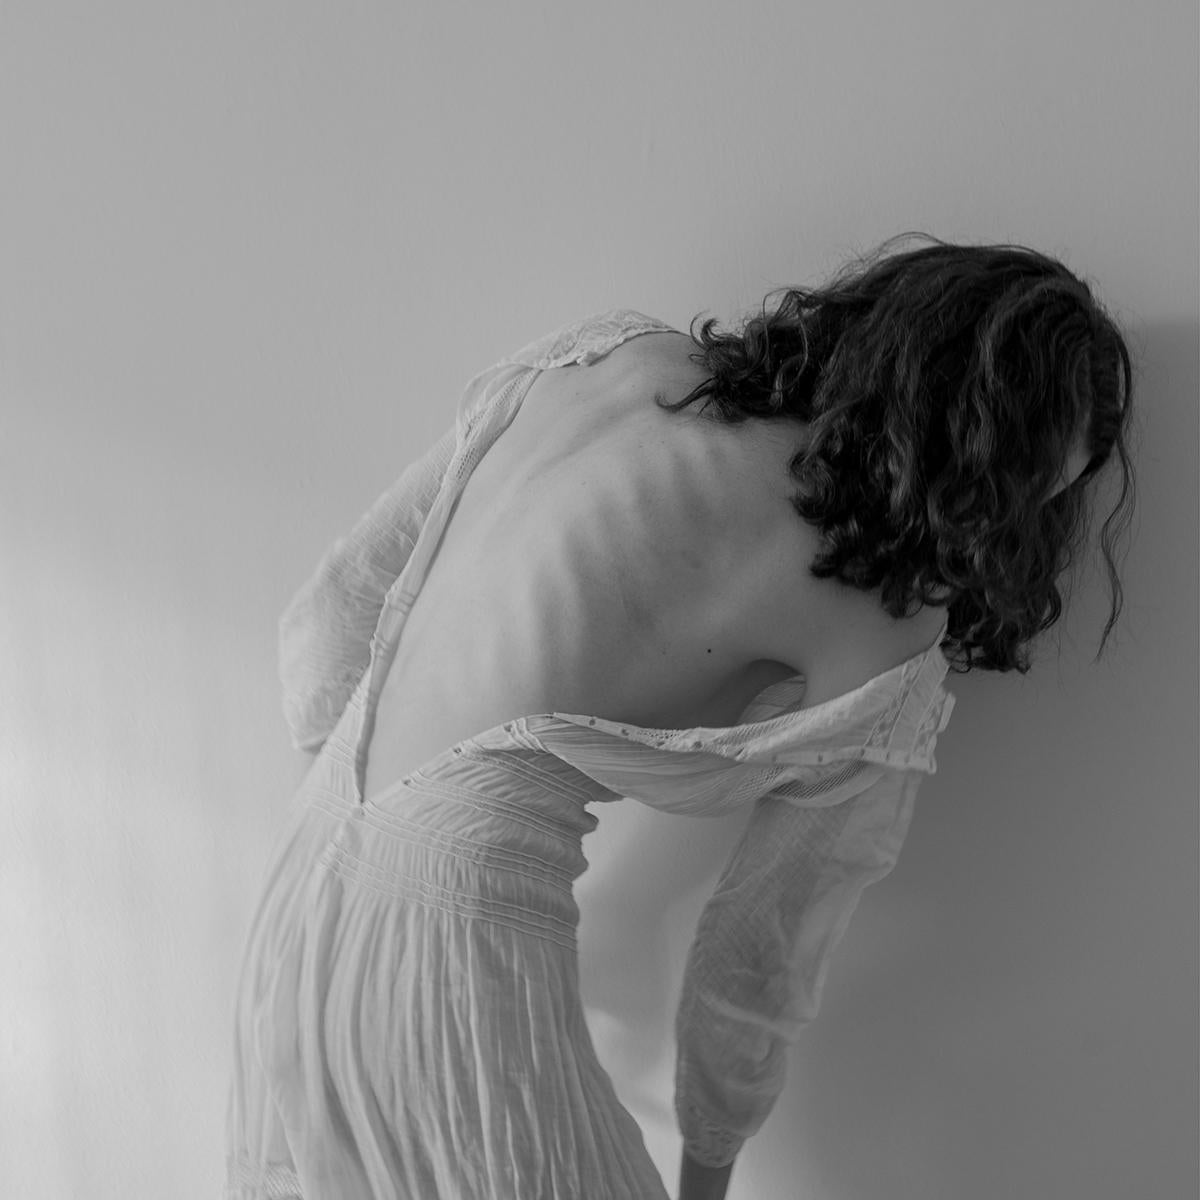 Untitled 4 - Fine Art Photography, Portrait, Black & White, Sofia Fernandez - Gray Black and White Photograph by Sofia Fernandez Stenström